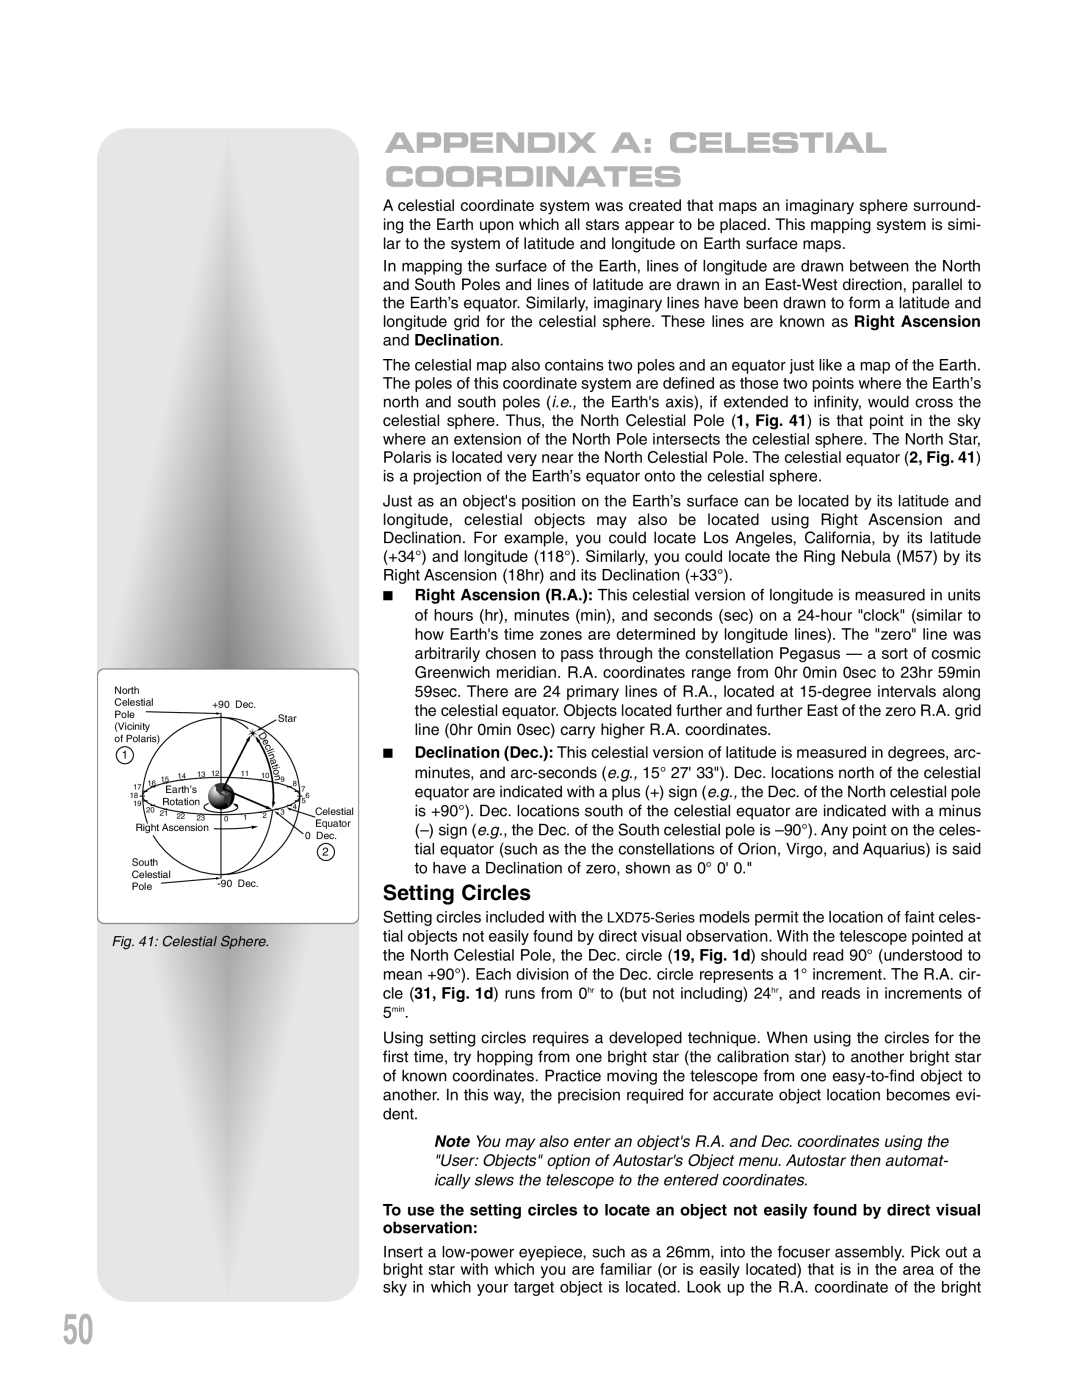 Meade LXD 75-Series instruction manual Appendix A: Celestial Coordinates, Setting Circles 